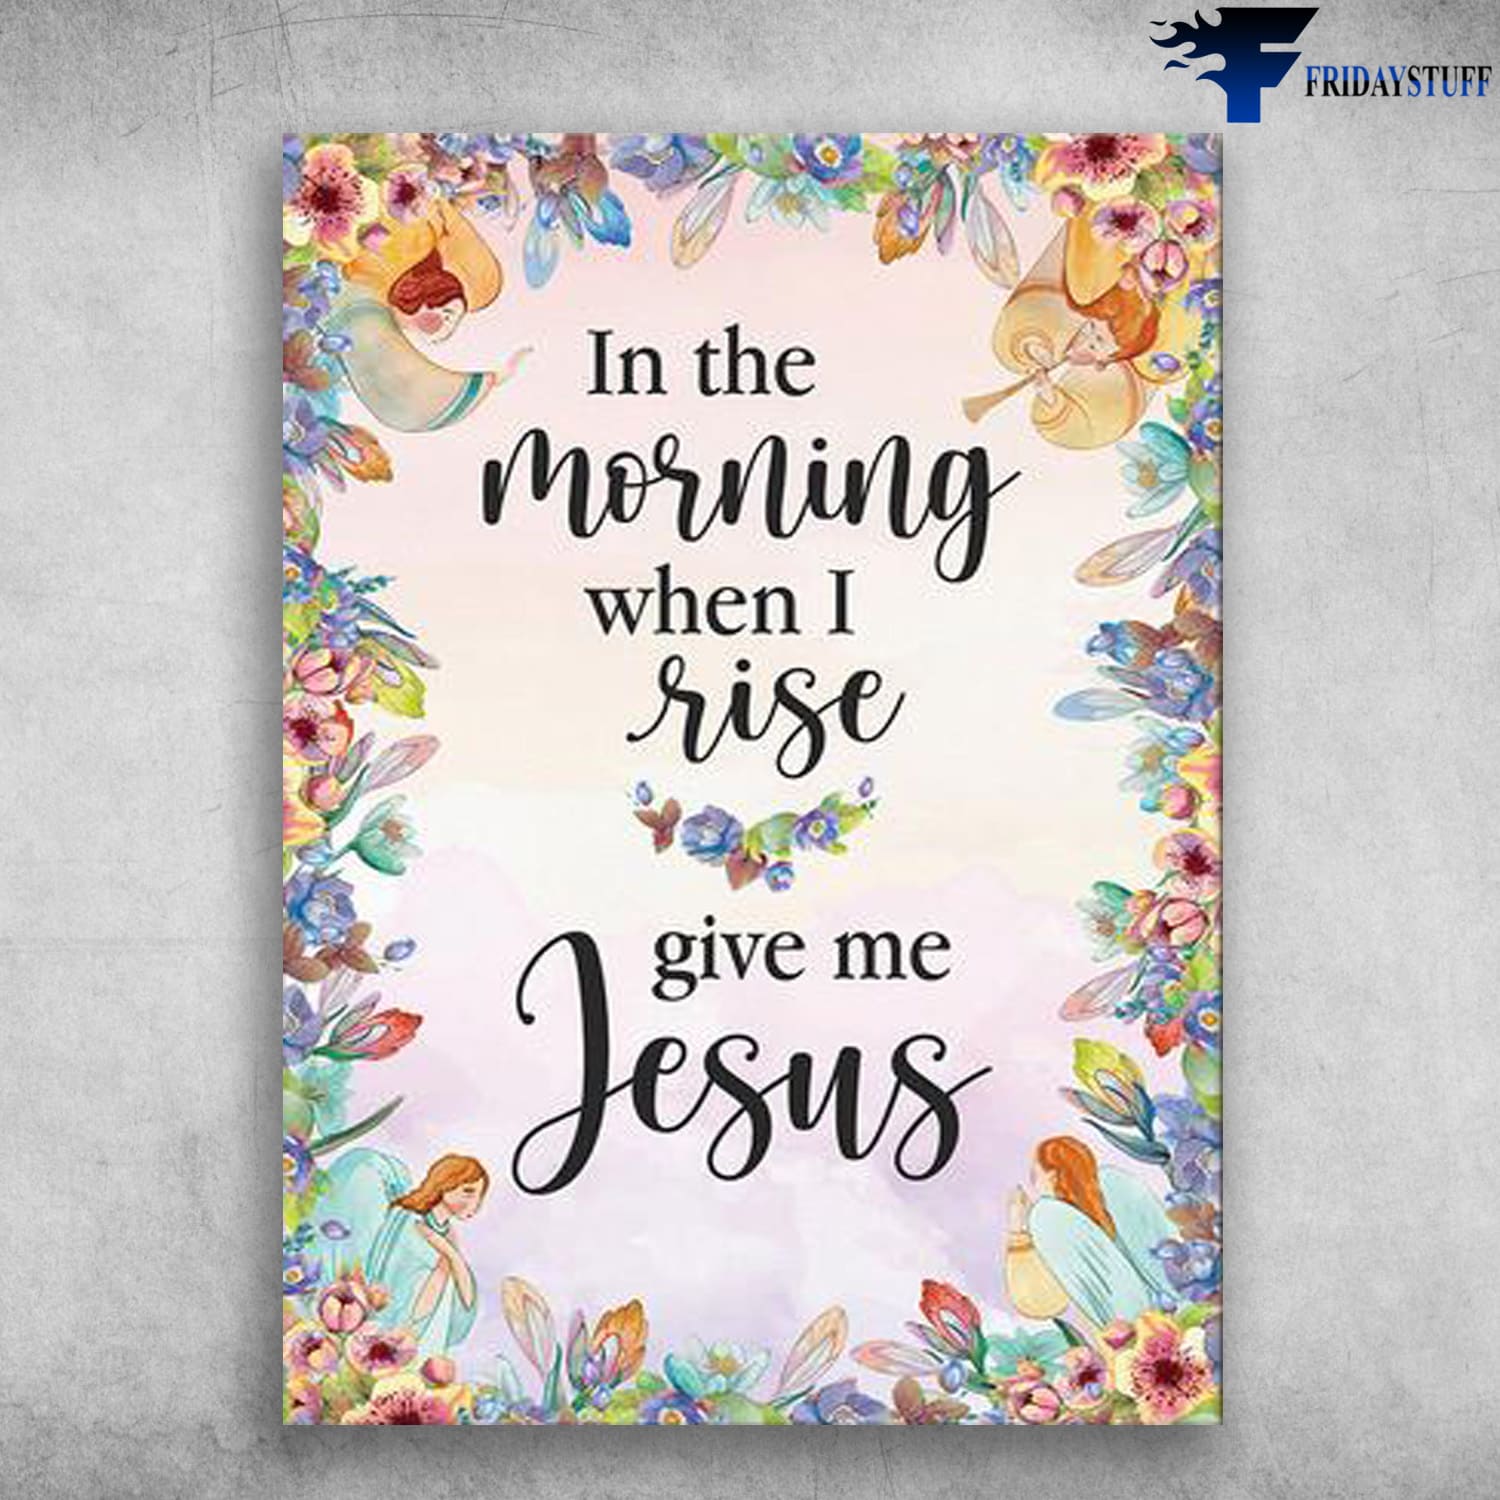 Jesus Poster, Jesus Lover, In The Morning, When I Rise, Give Me Jesus